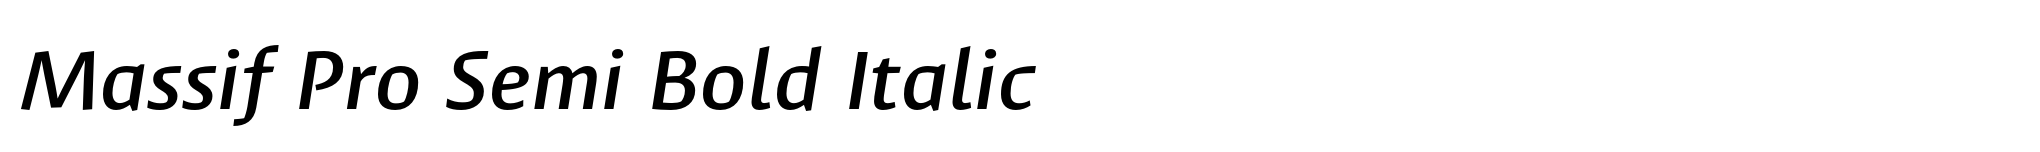 Massif Pro Semi Bold Italic image